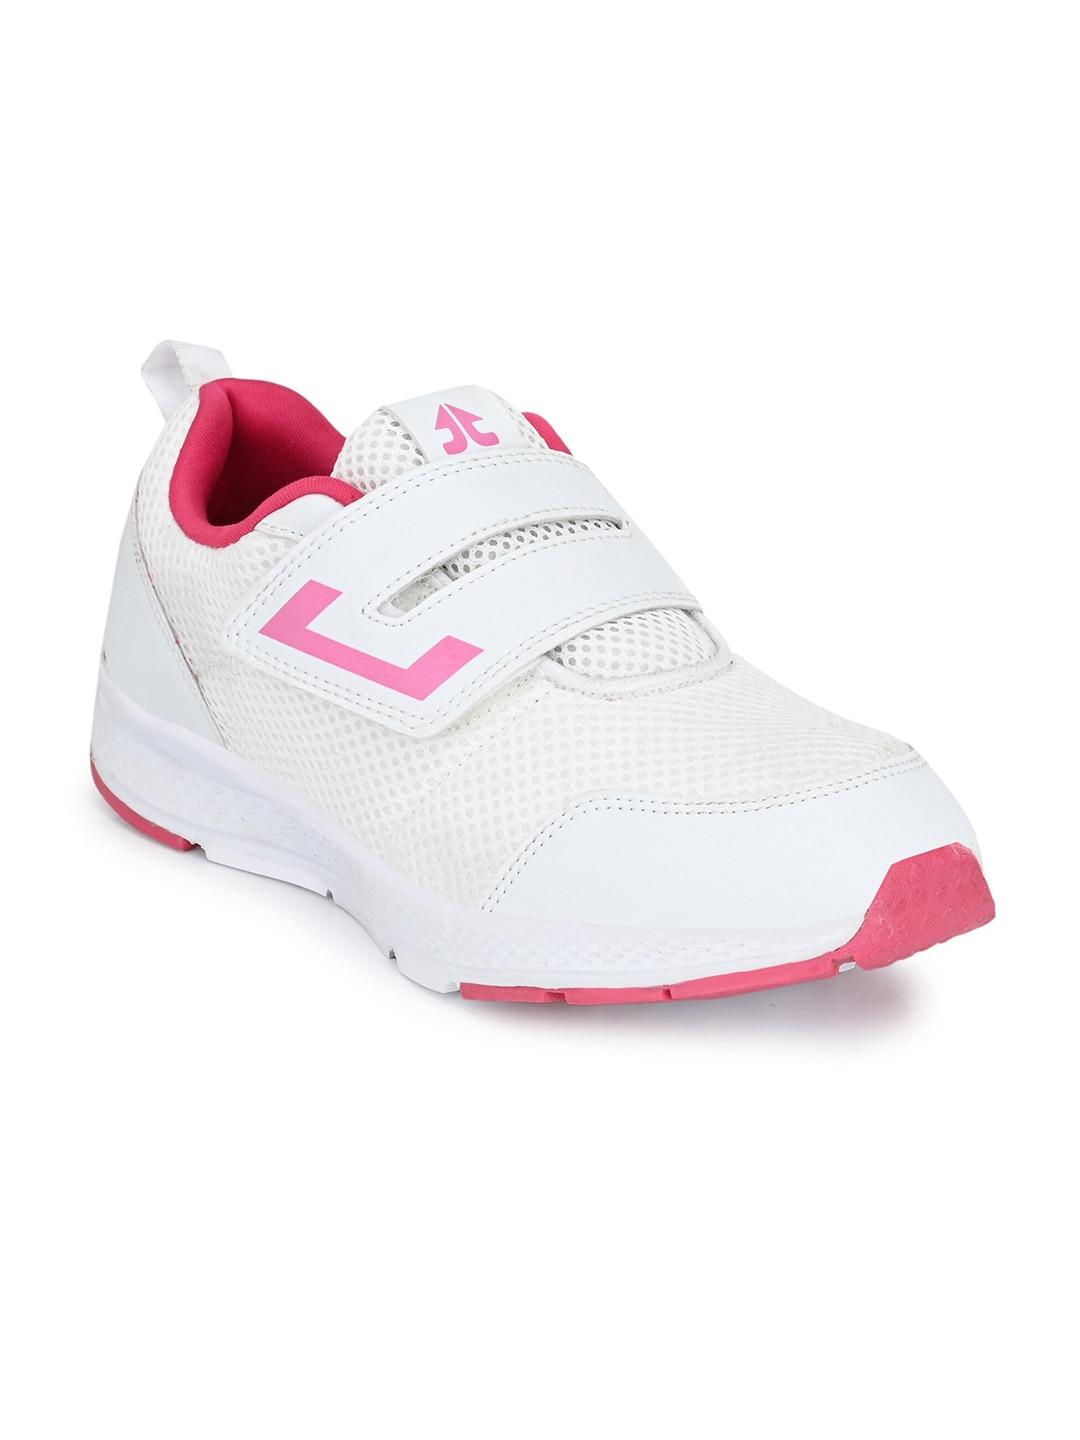 OFF LIMITS Women White & Pink Mesh Walking Non-Marking Shoes